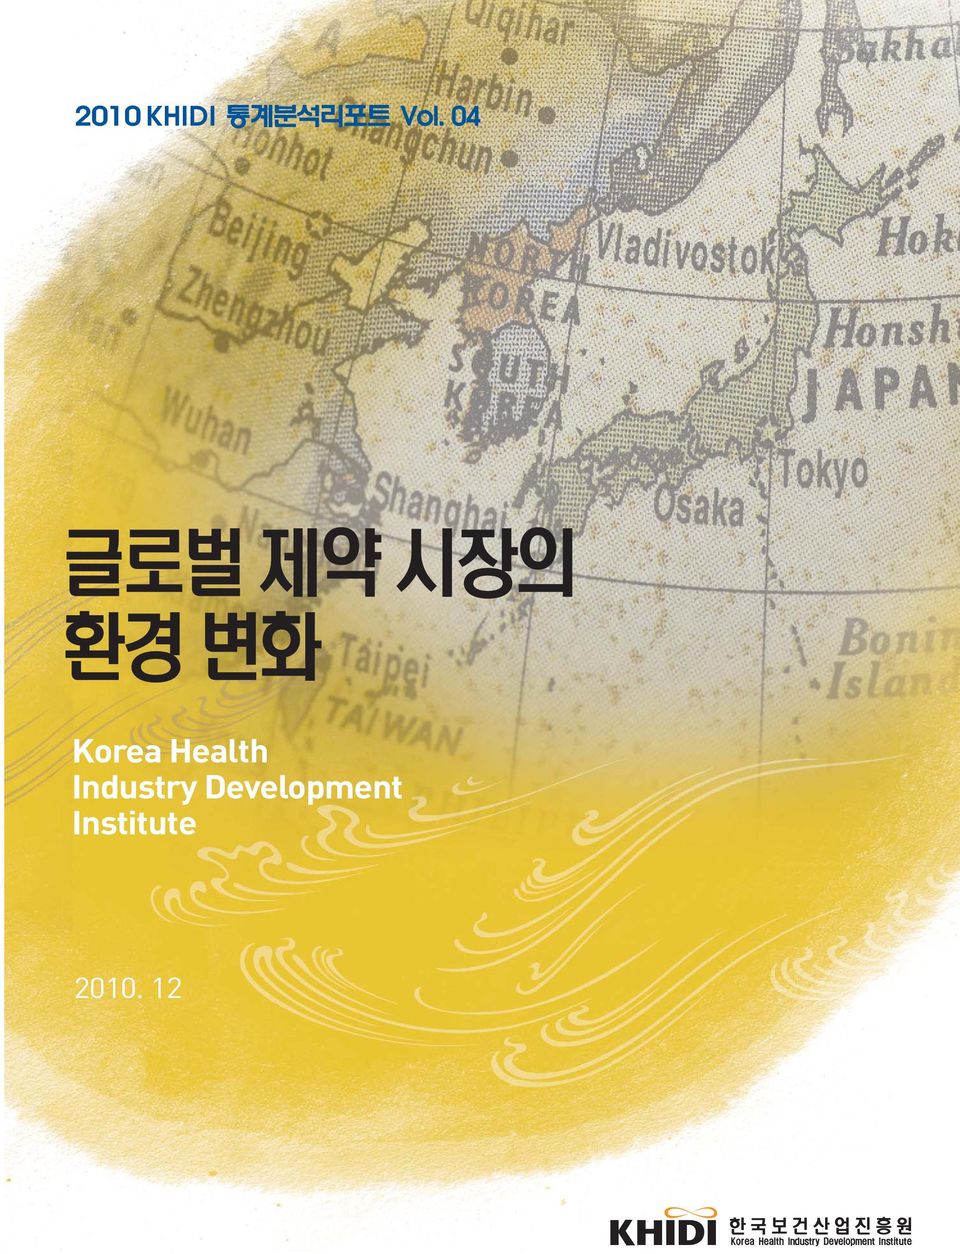 Korea Health Industry